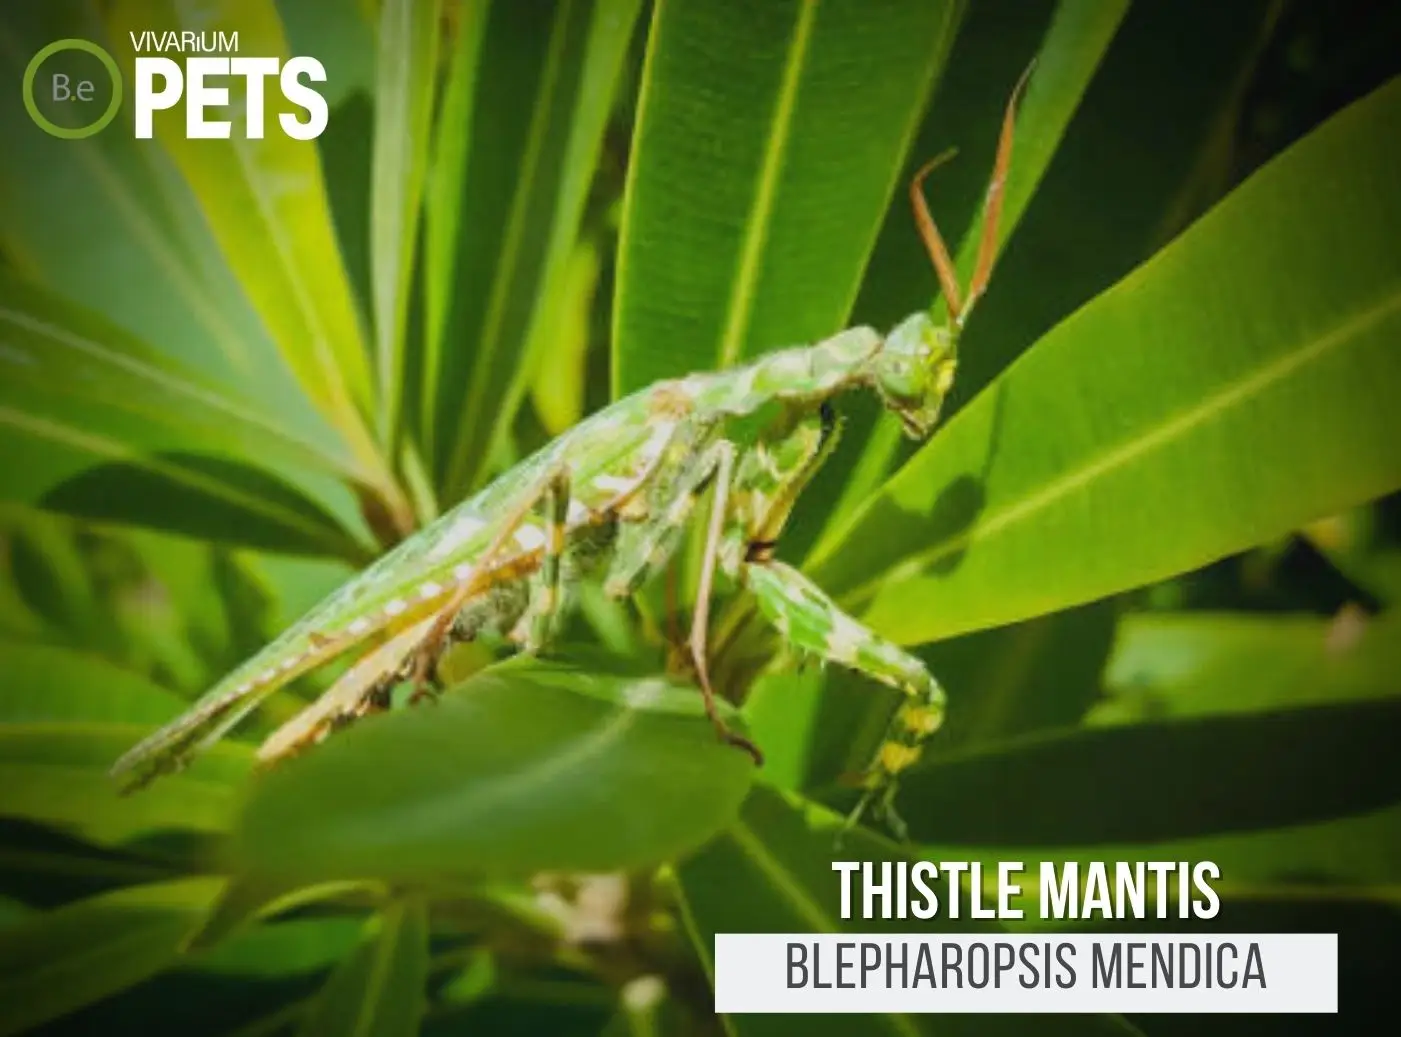 Blepharopsis mendica: Complete Thistle Mantis Care Guide